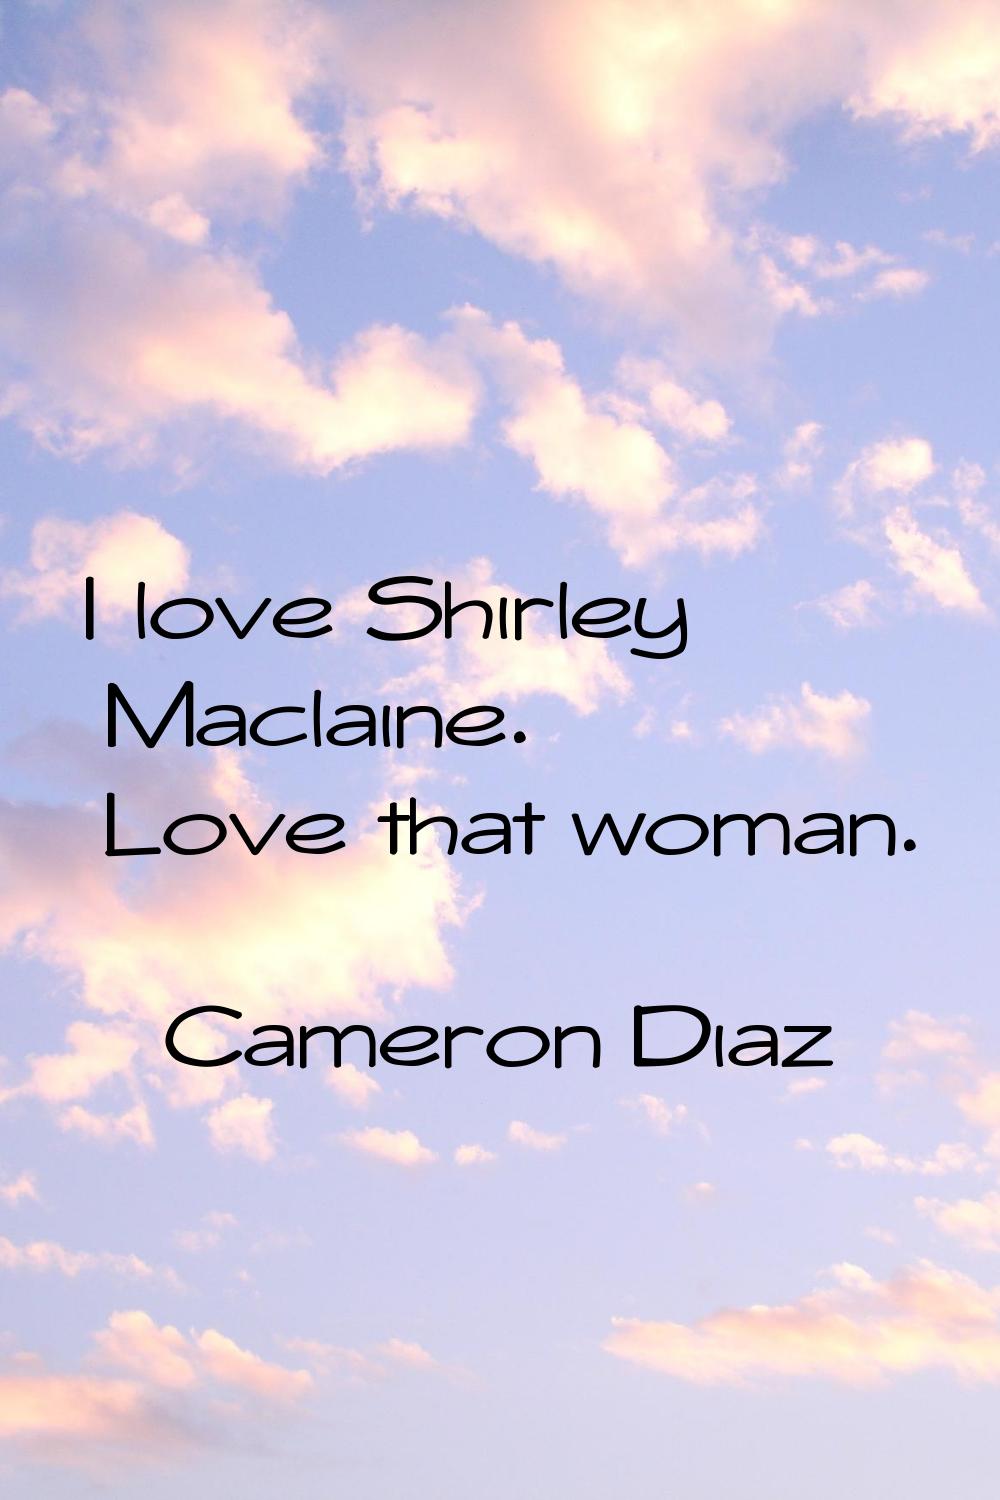 I love Shirley Maclaine. Love that woman.